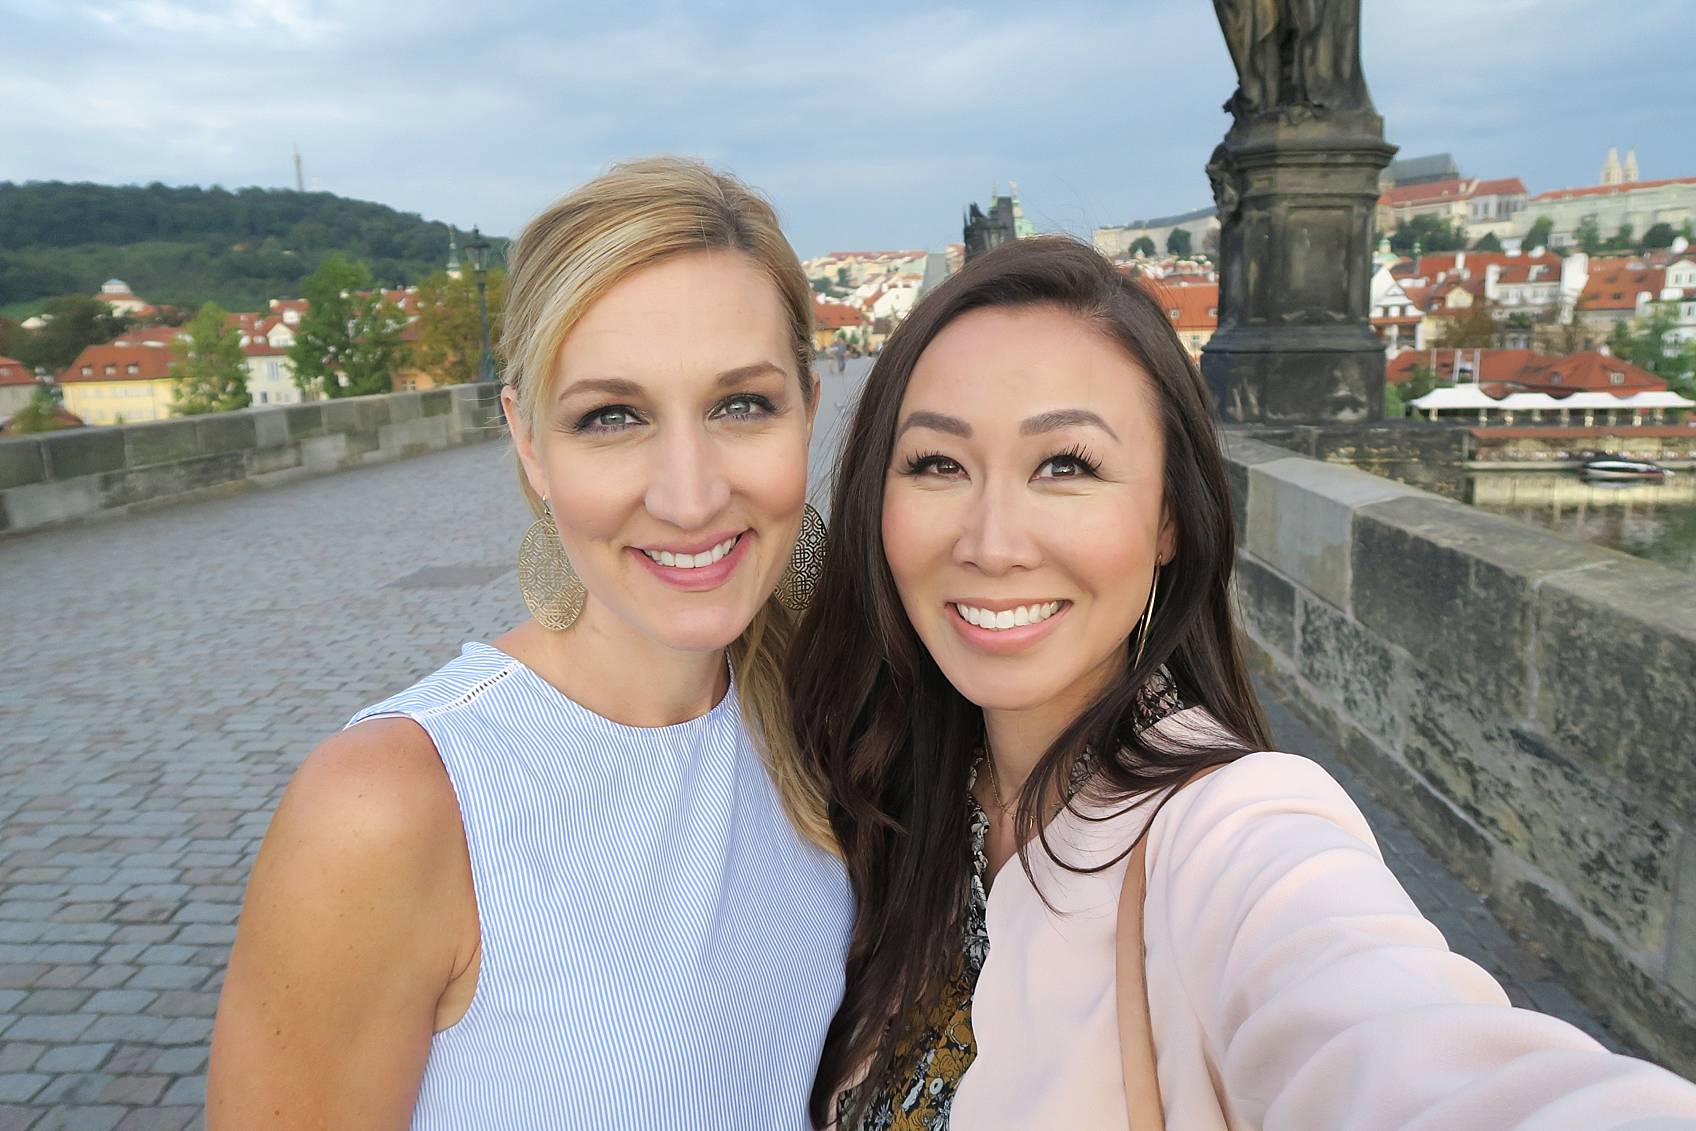 Diana Elizabeth selfie with best friend Michelle on Charles Bridge in Prague